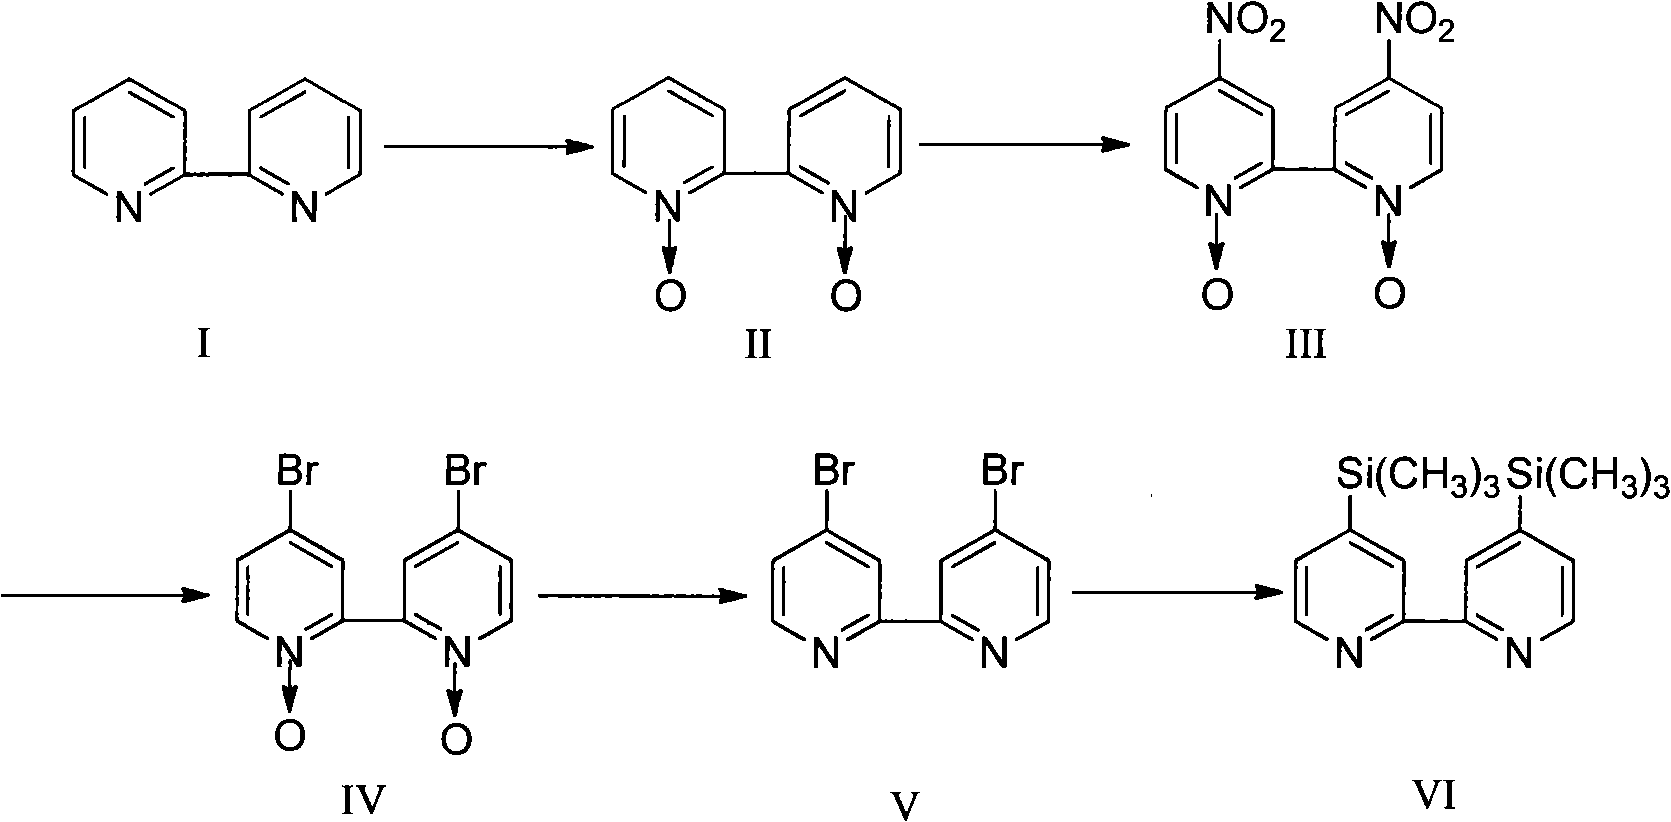 Synthesis method of novel compound 4,4'-bis(trimethylsilyl)-2,2'-bipyridyl